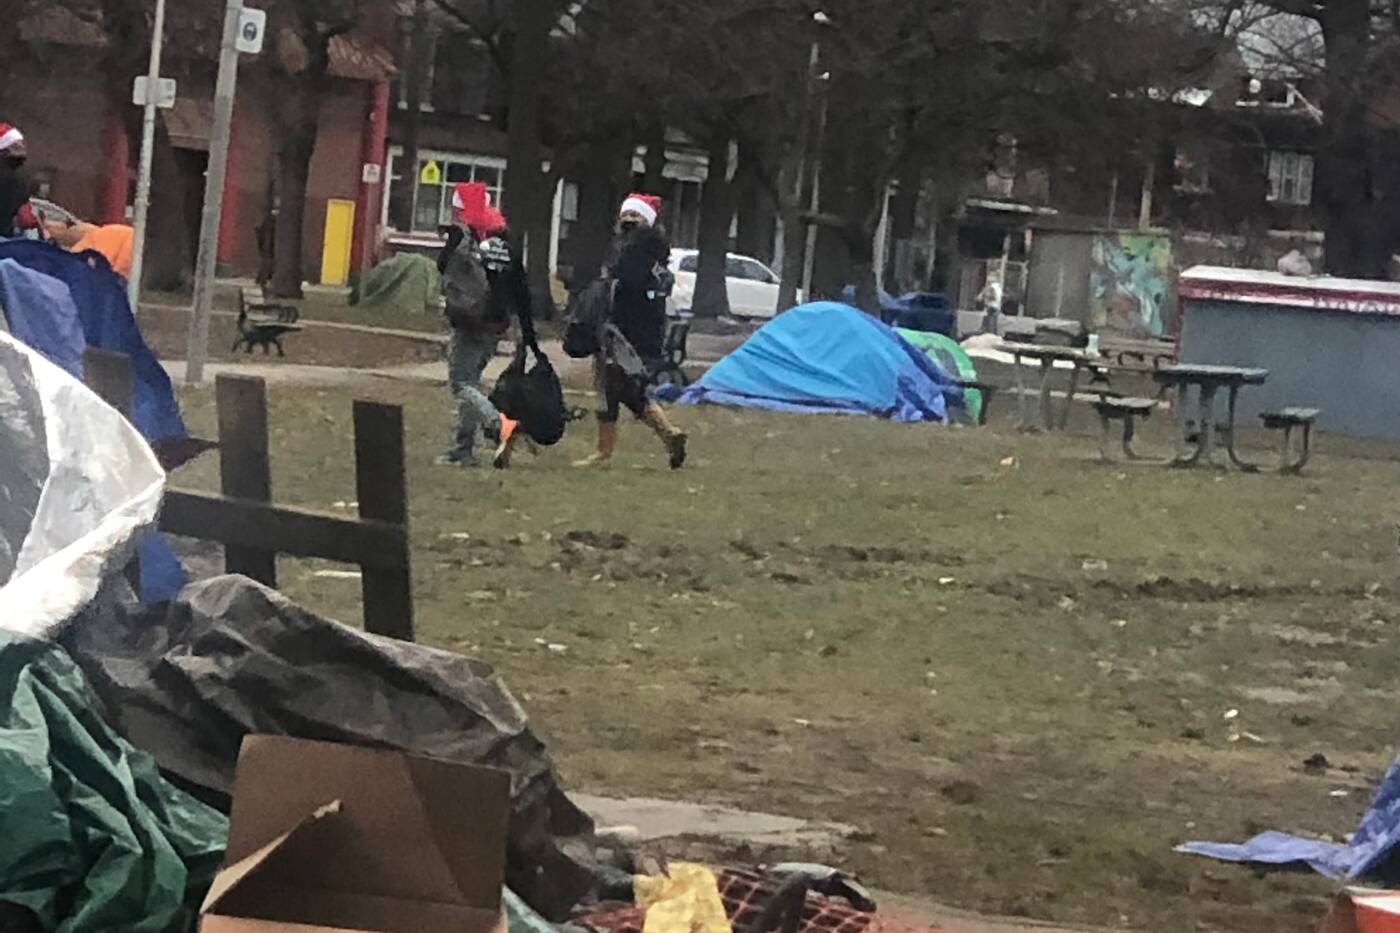 toronto homeless